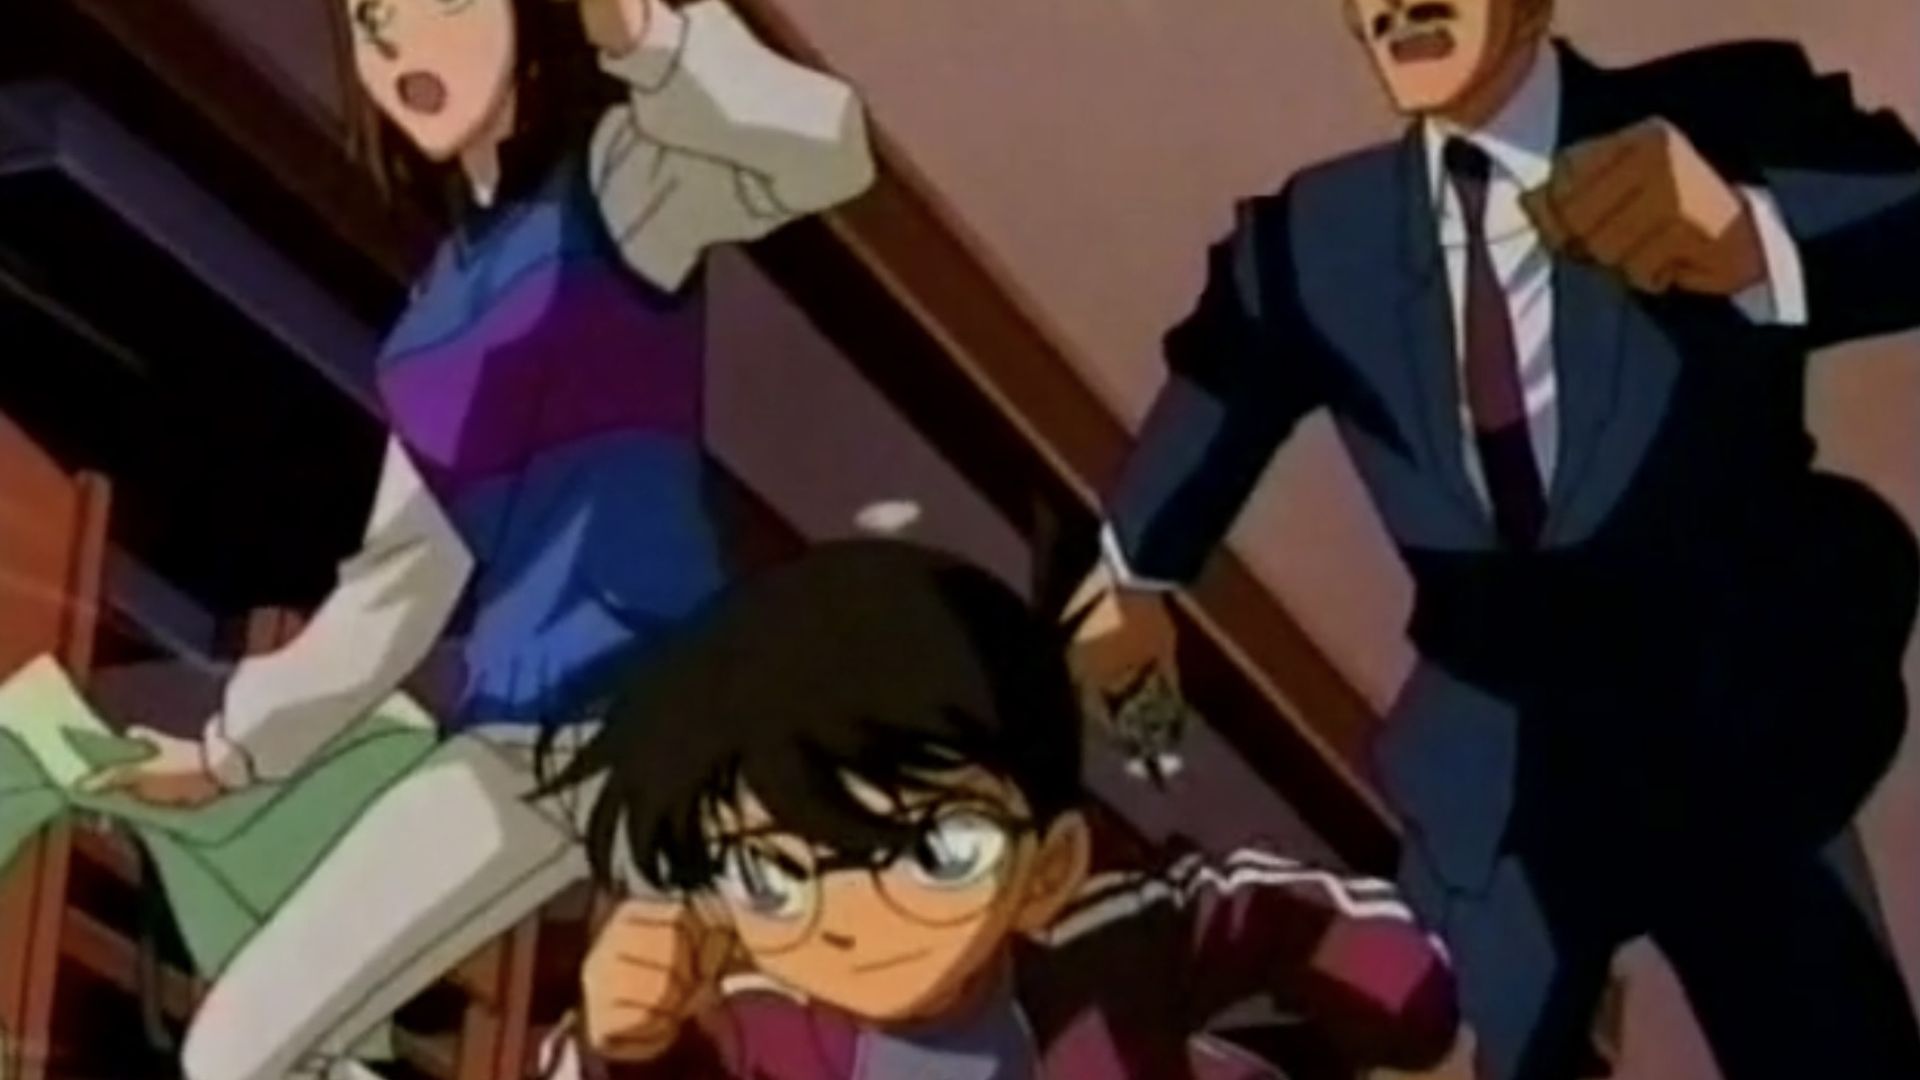 Detective Conan background